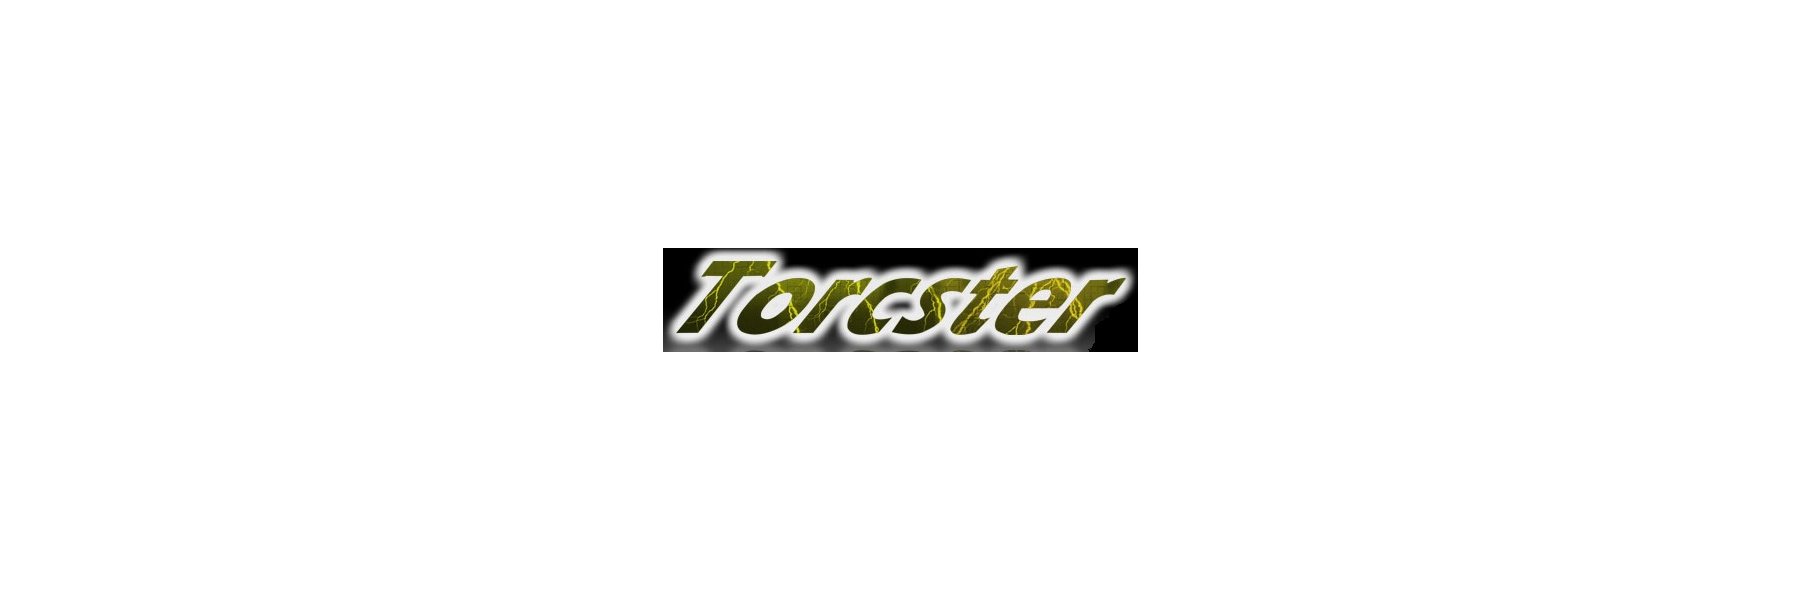 Torcster